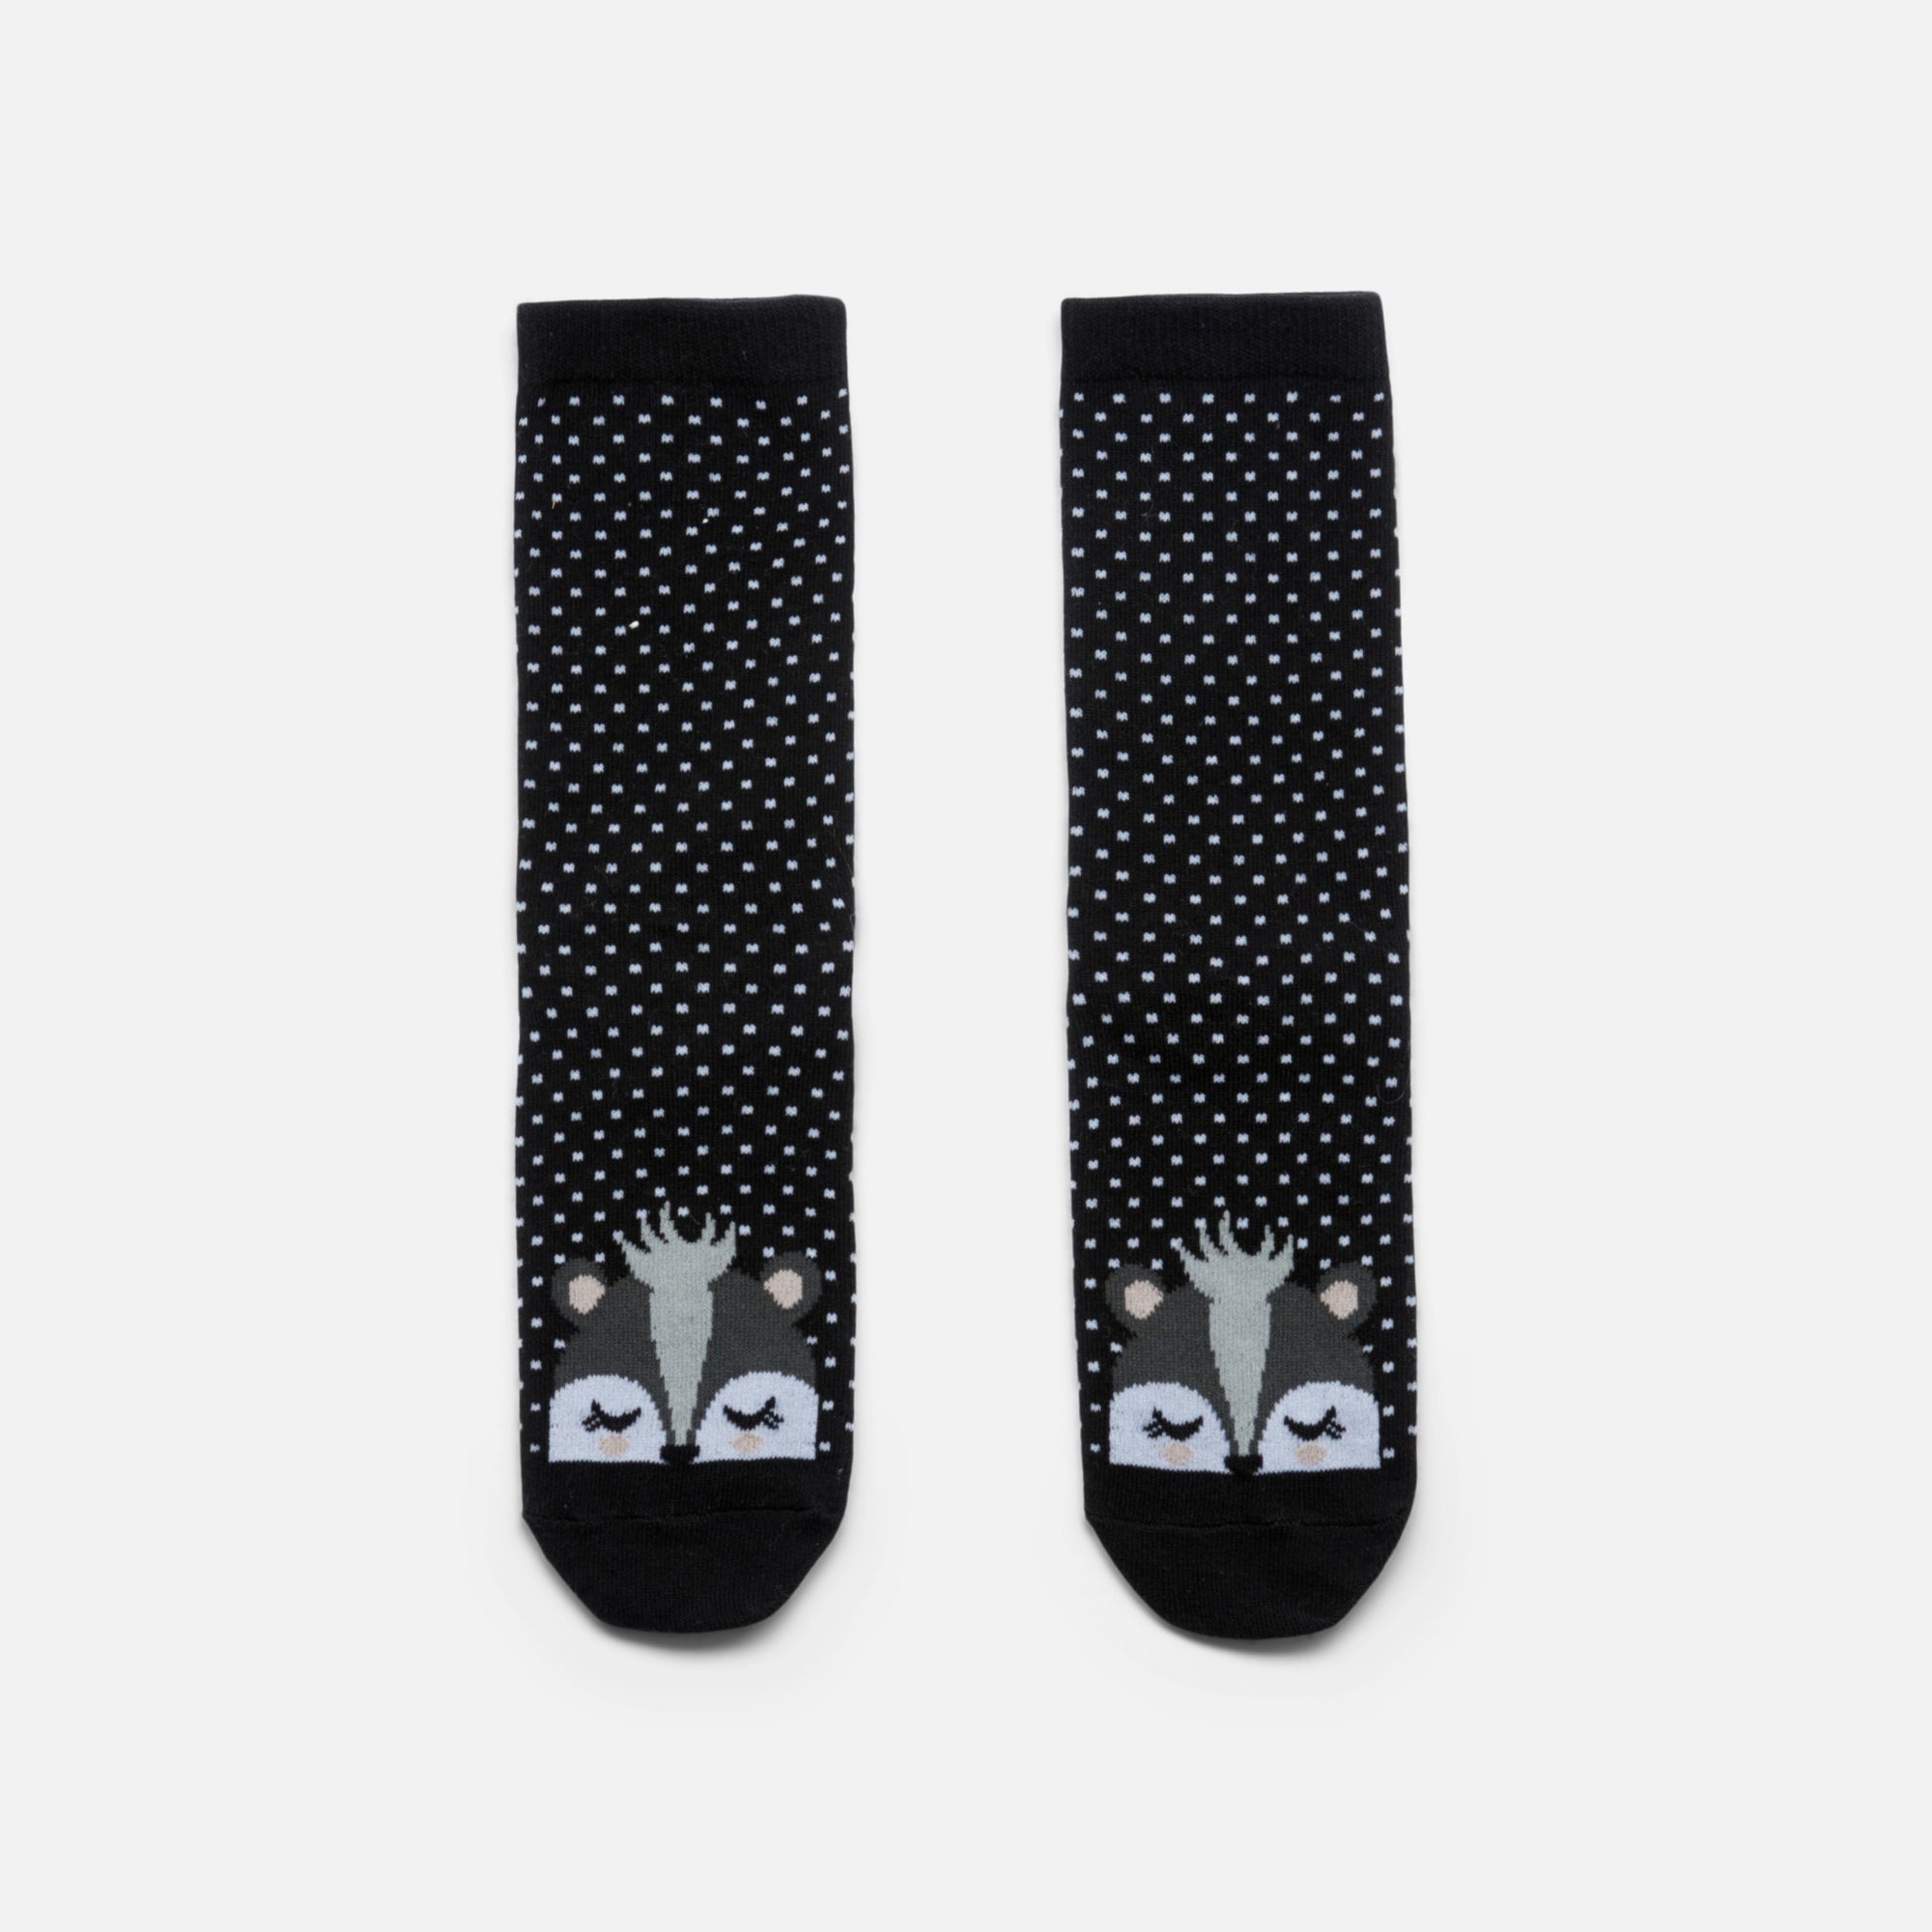 Black socks with polka dots and raccoons 